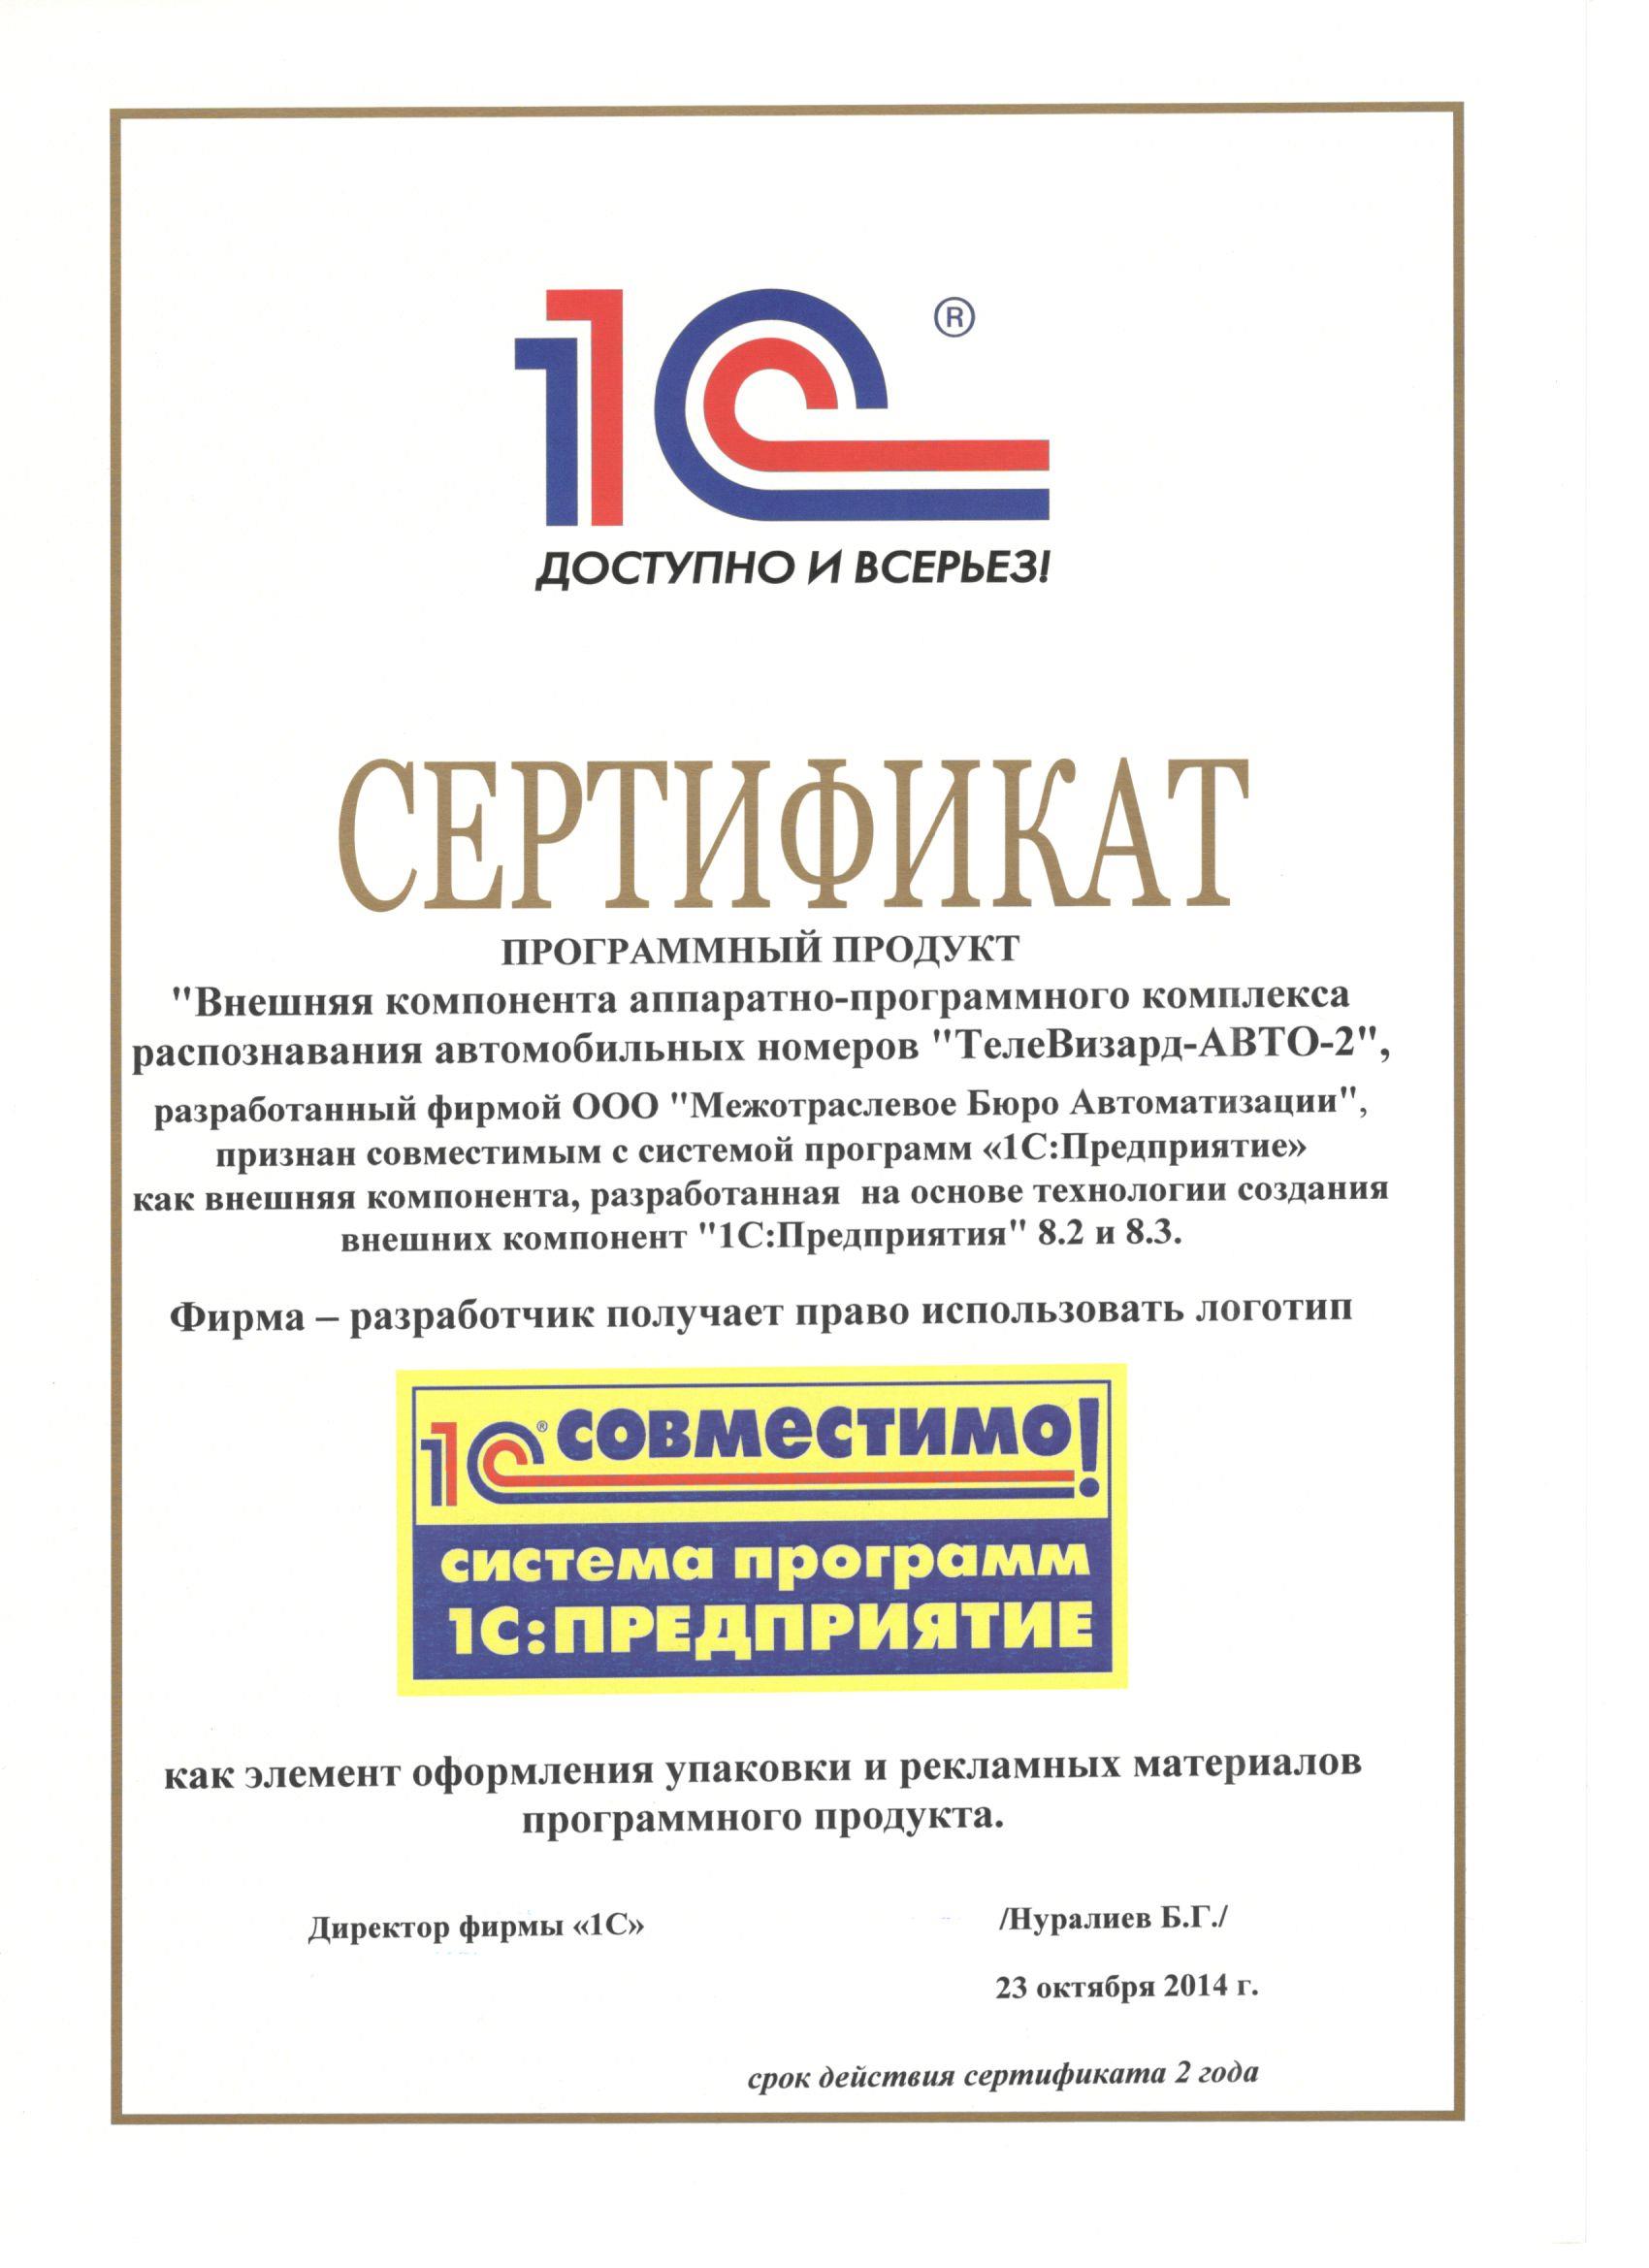 2014.11.10 Сертификат 1С Совместимо. ТелеВизард-АВТО-2